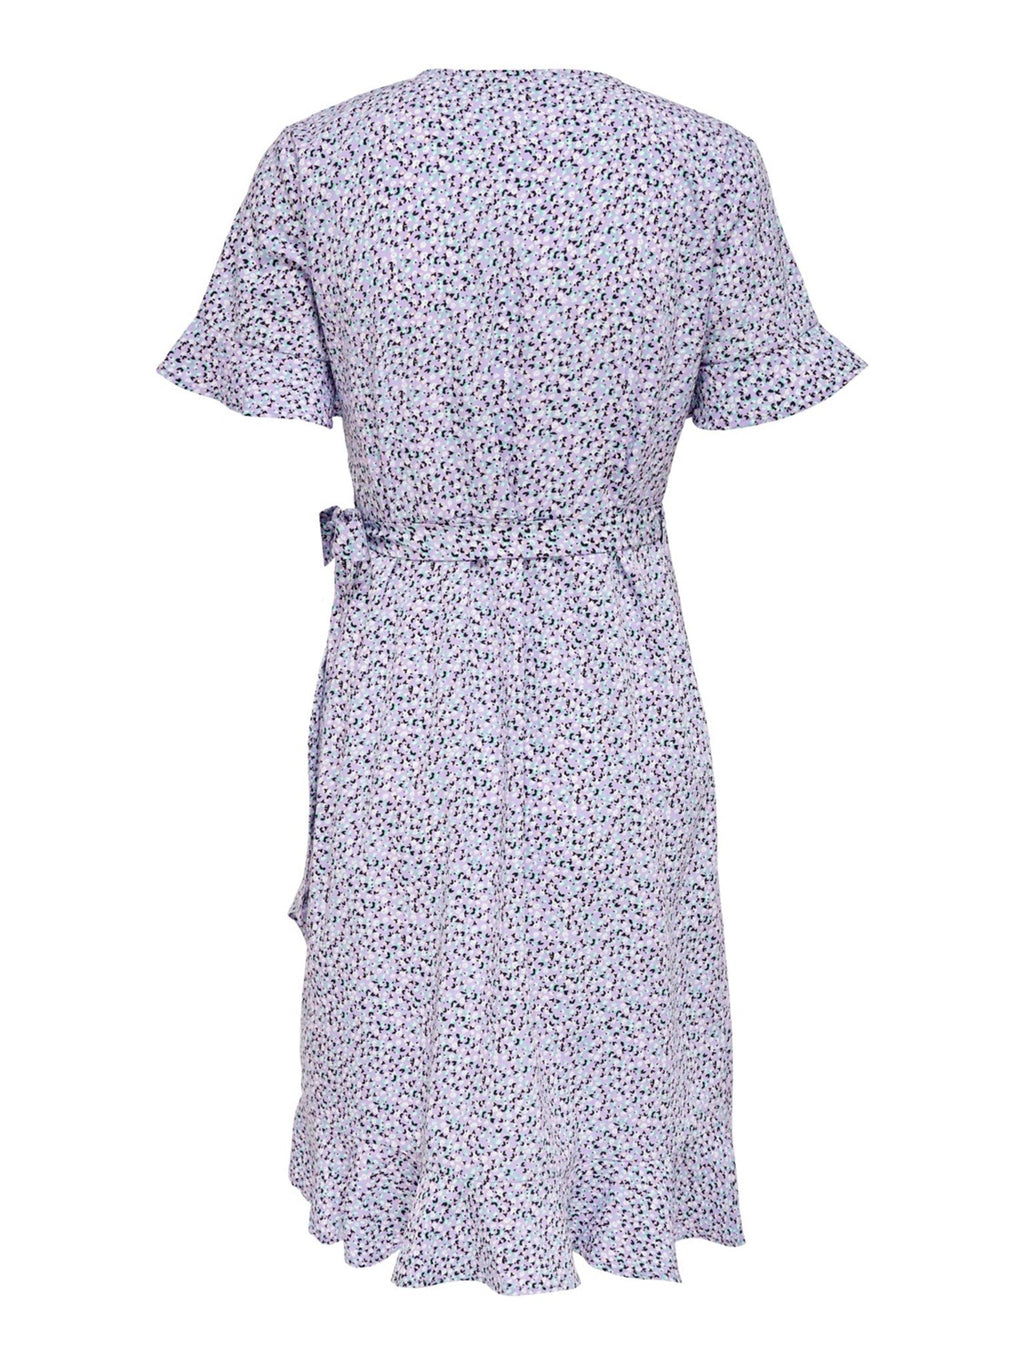 Olivia Wrap Dress - Čínska fialová